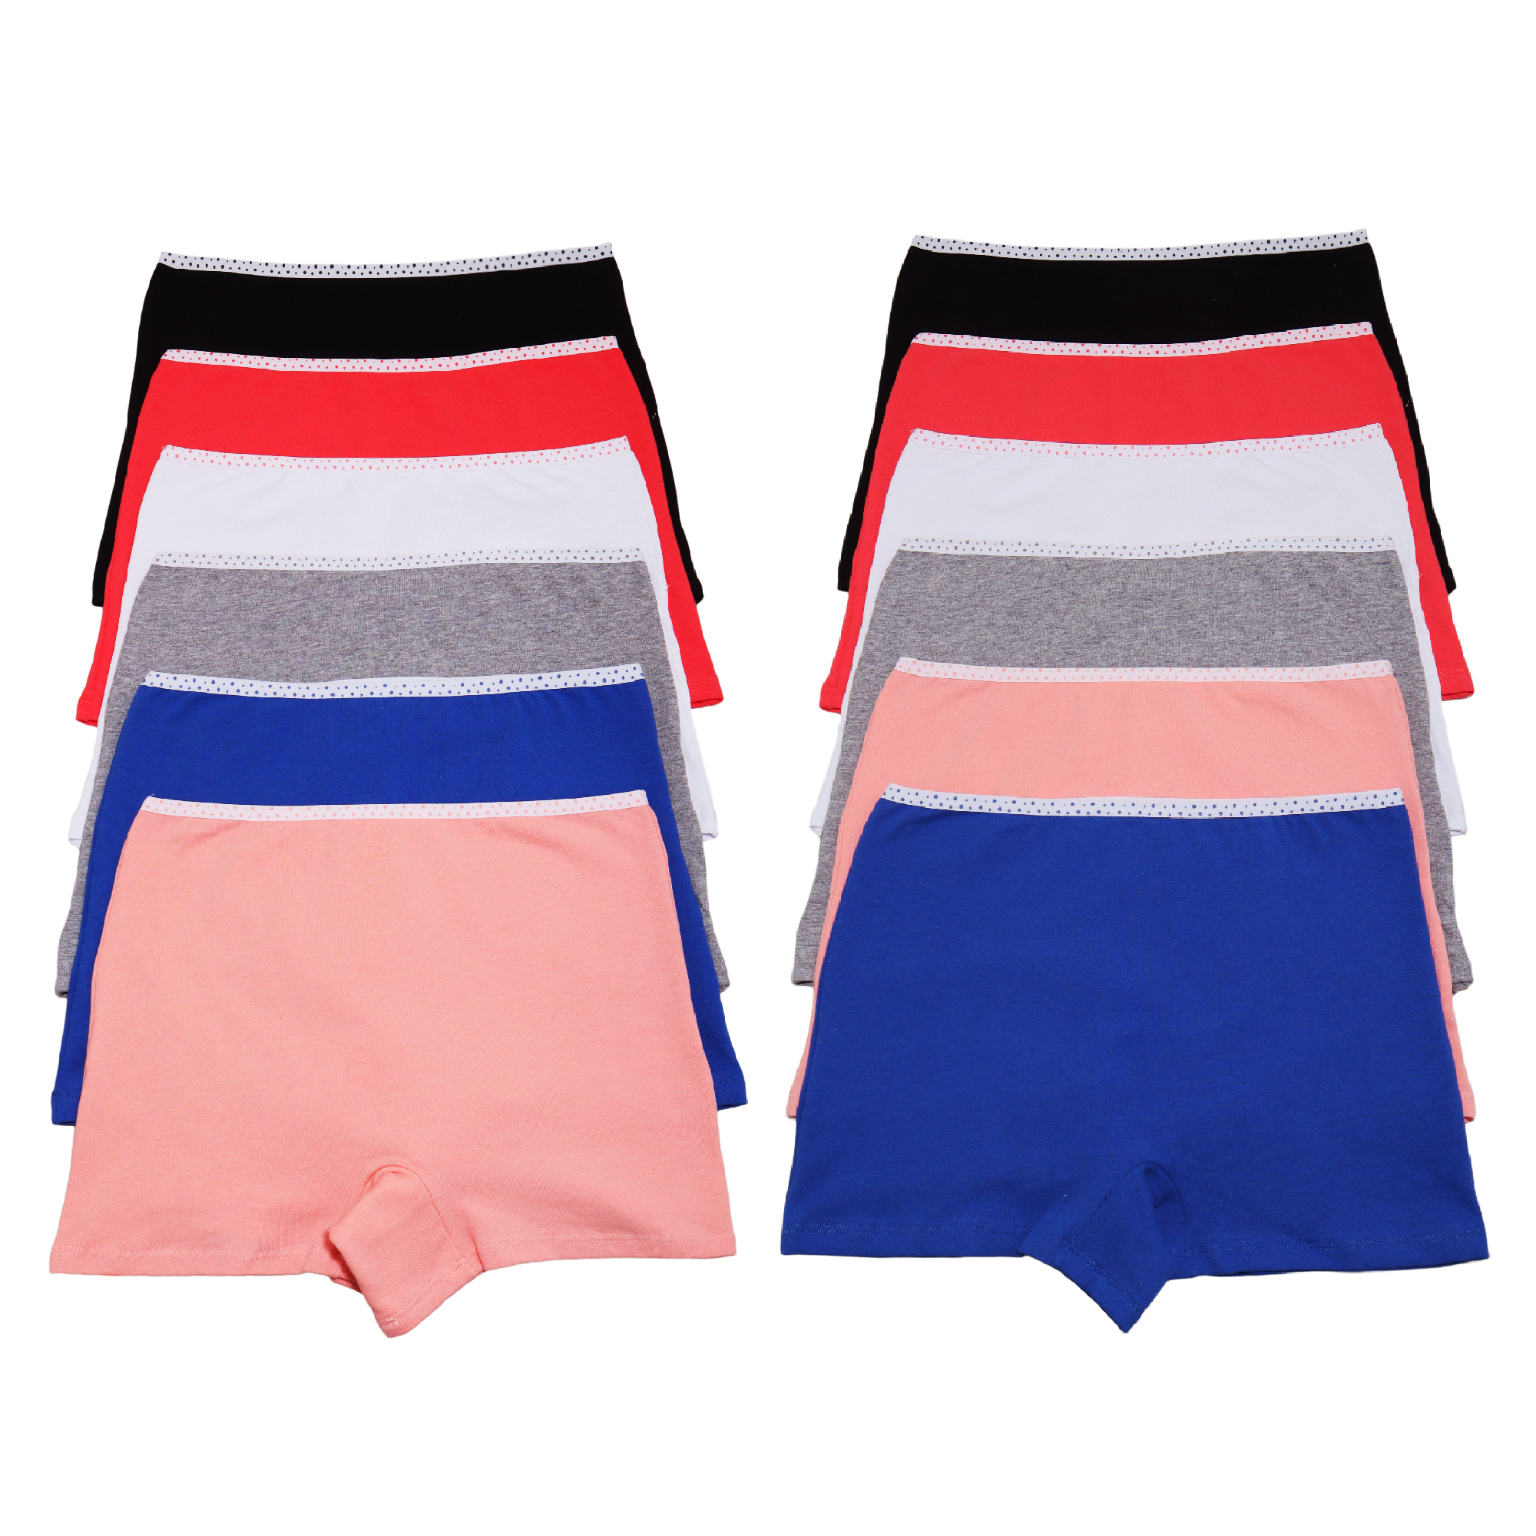 Wholesale Women's Boxer Briefs Panties - Assorted, S-XL